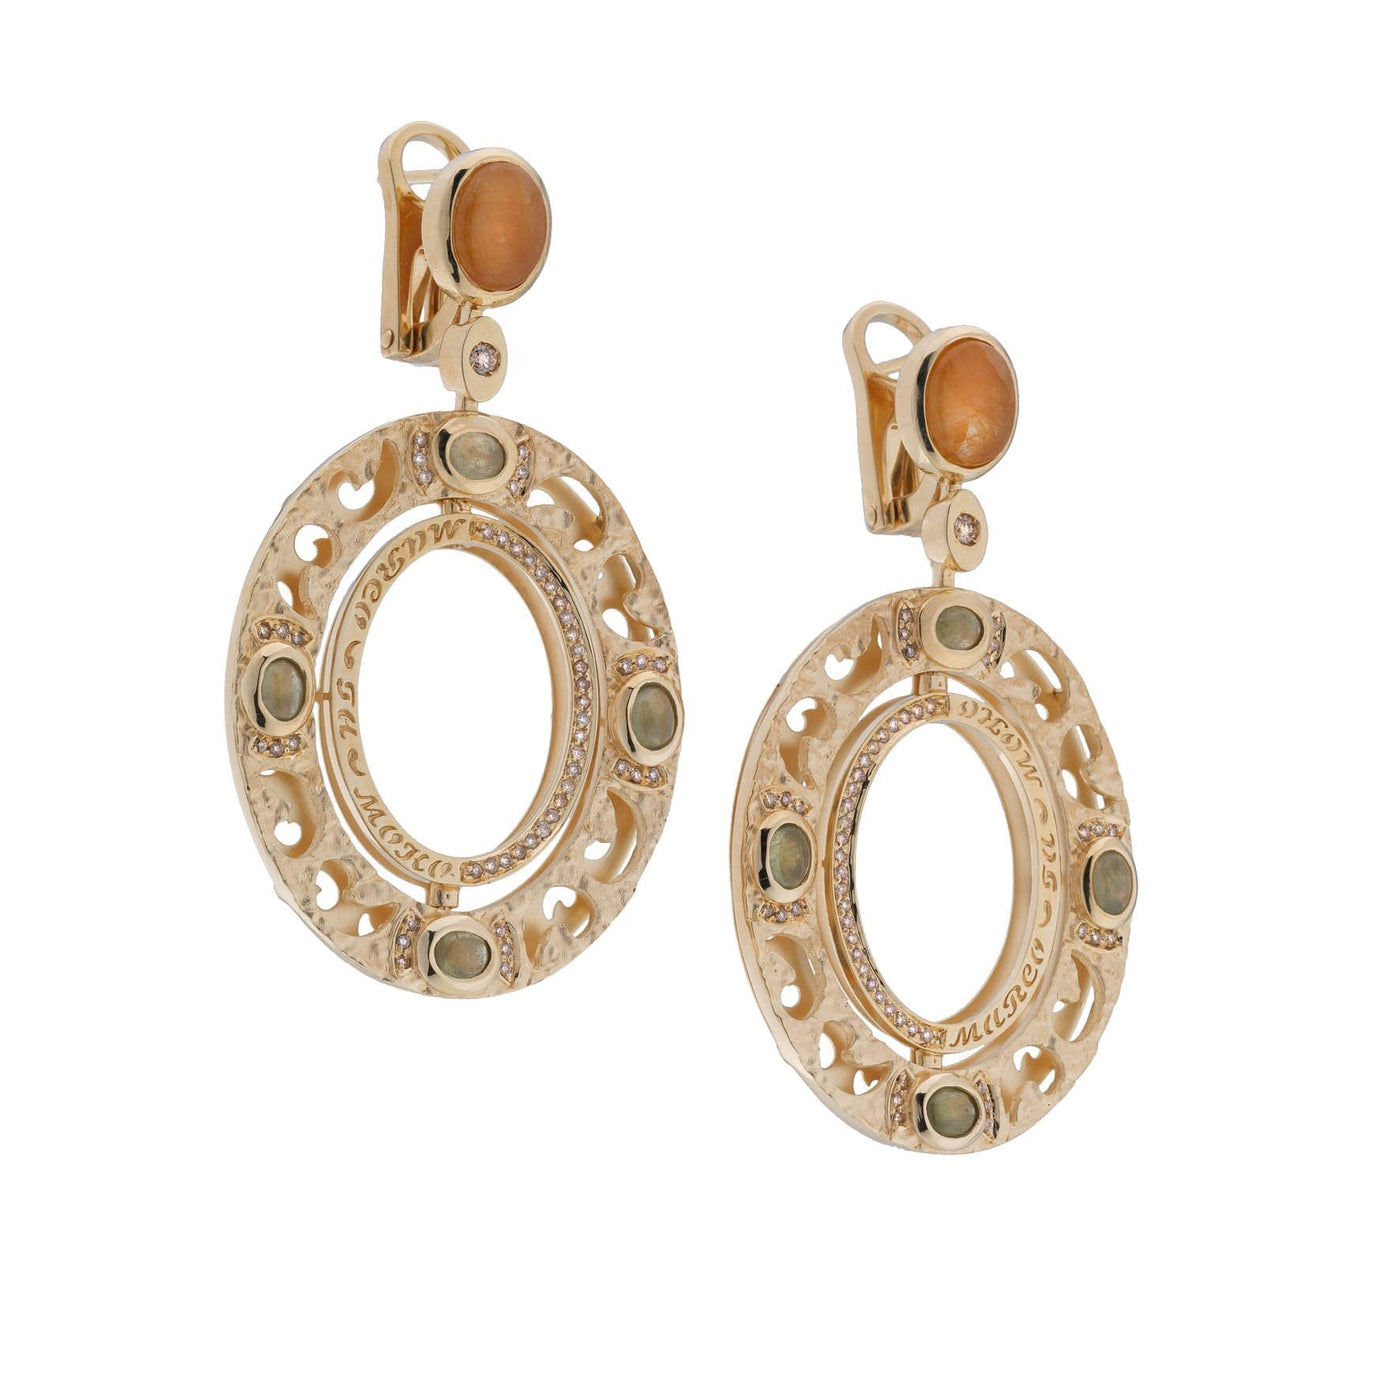 Regalia Oval Earrings with Sapphires & Diamonds